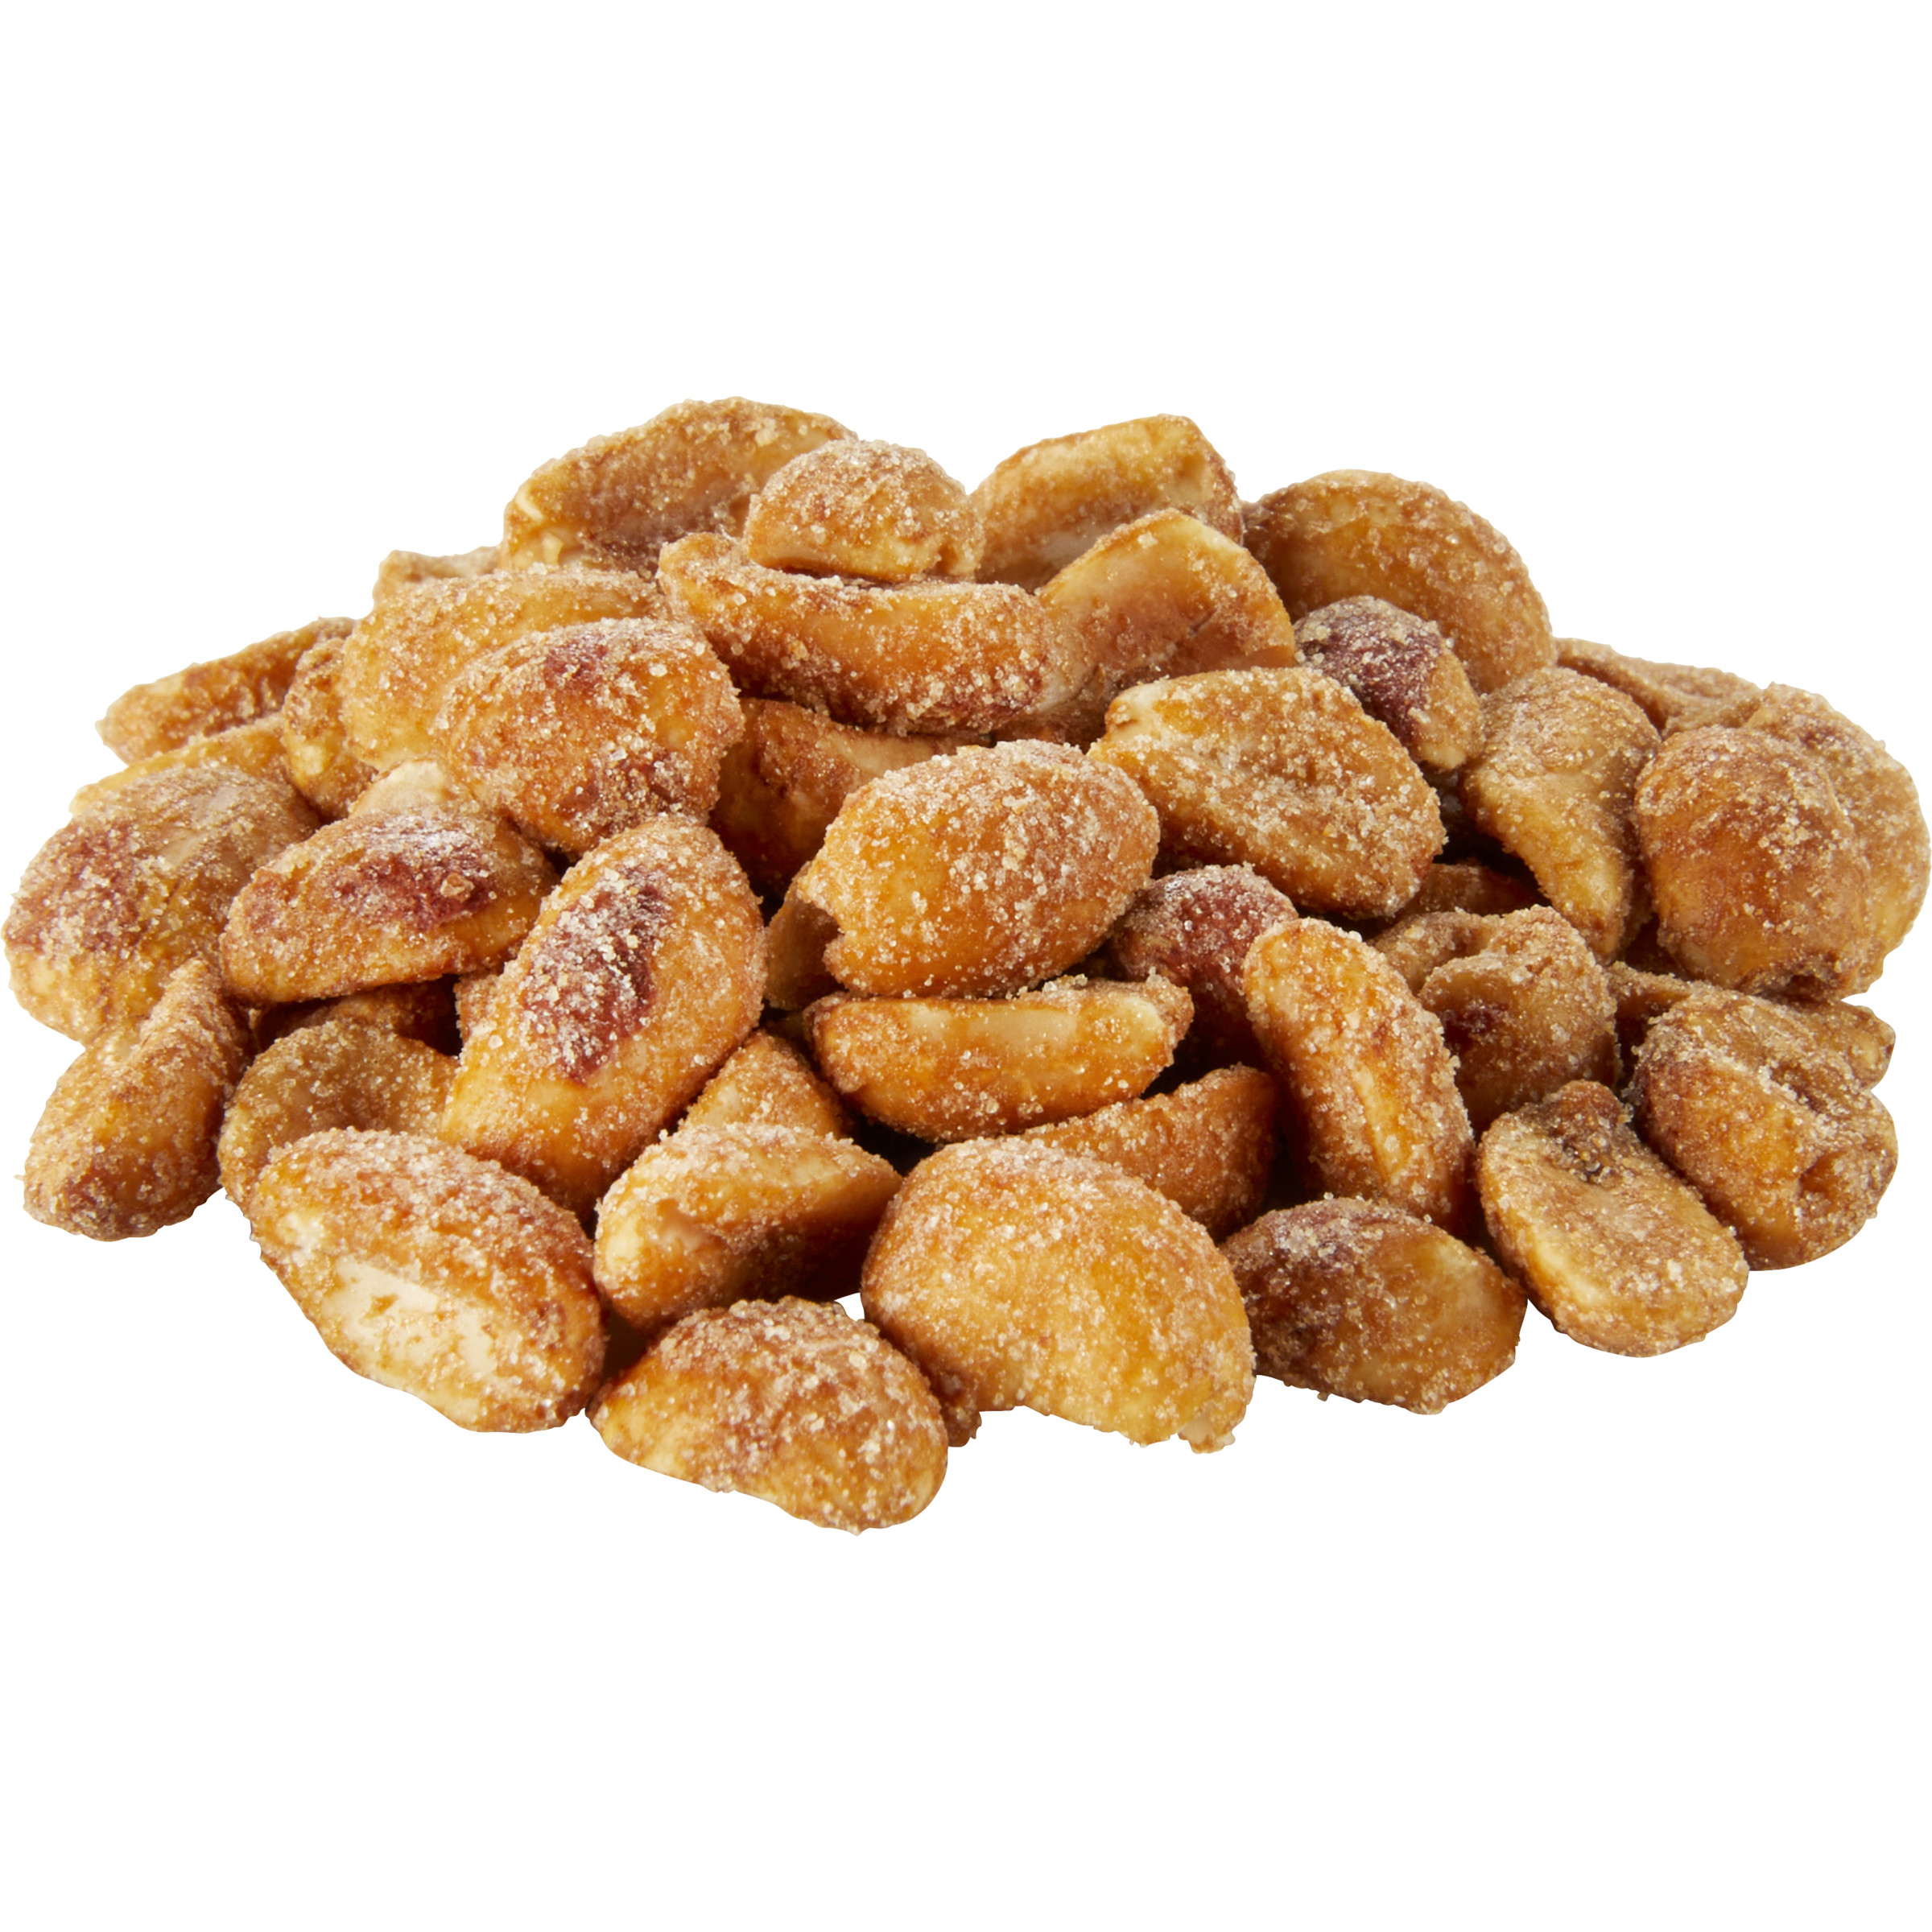 PLANTERS Honey Roasted Peanuts, 10 Ct Box, 1 oz Packs - image 5 of 15